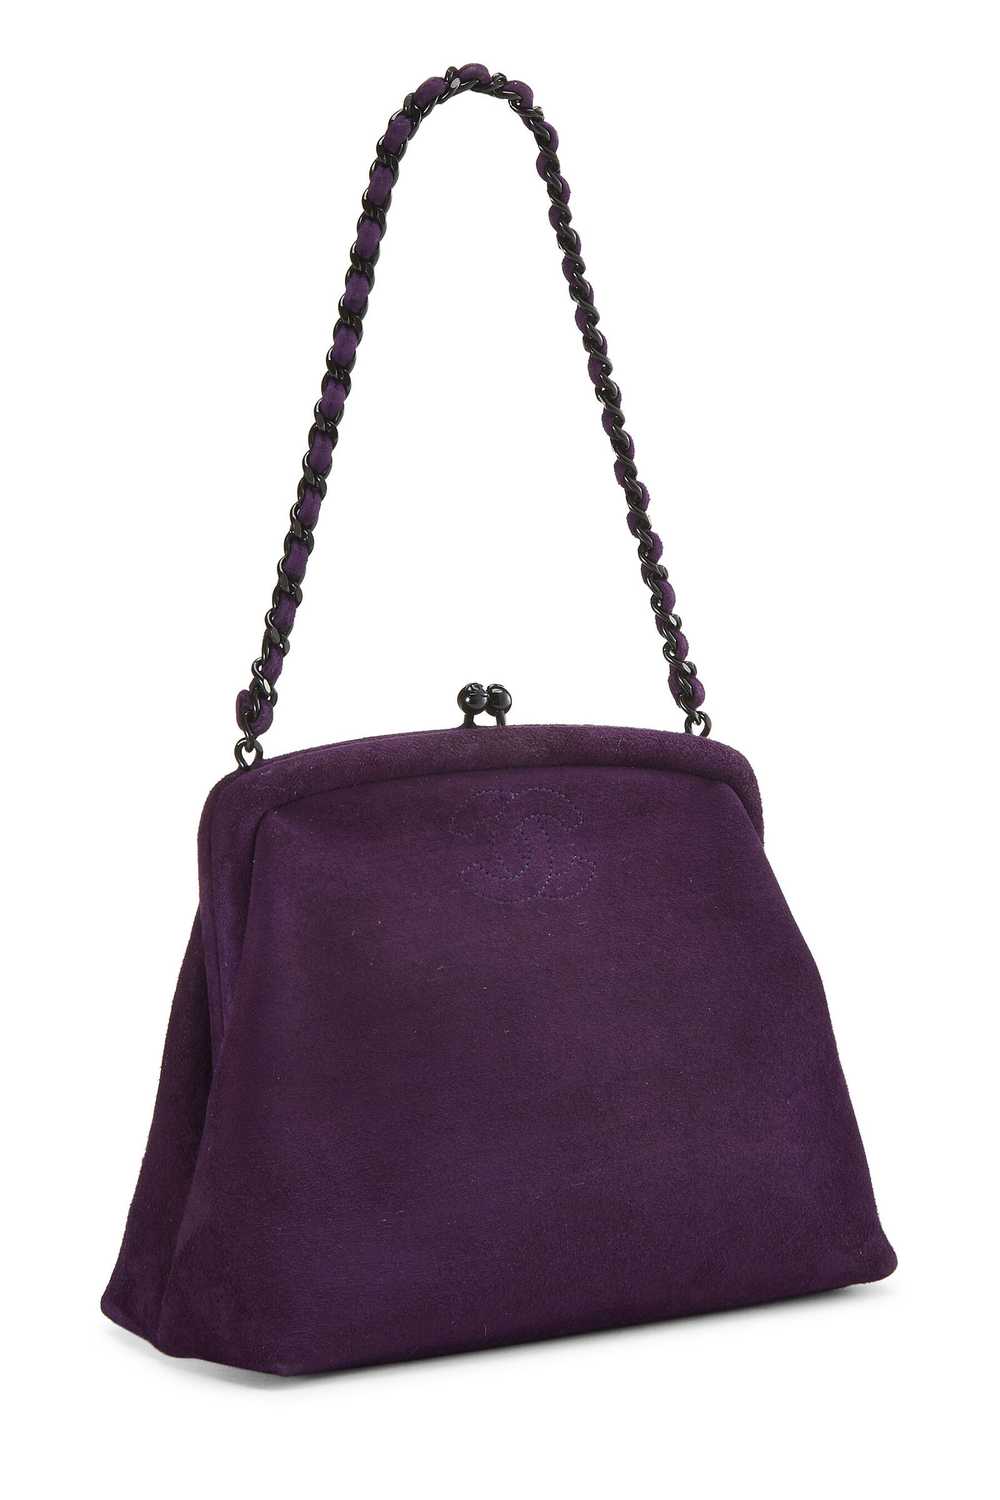 Purple Suede Kiss Lock Mini Bag - image 2